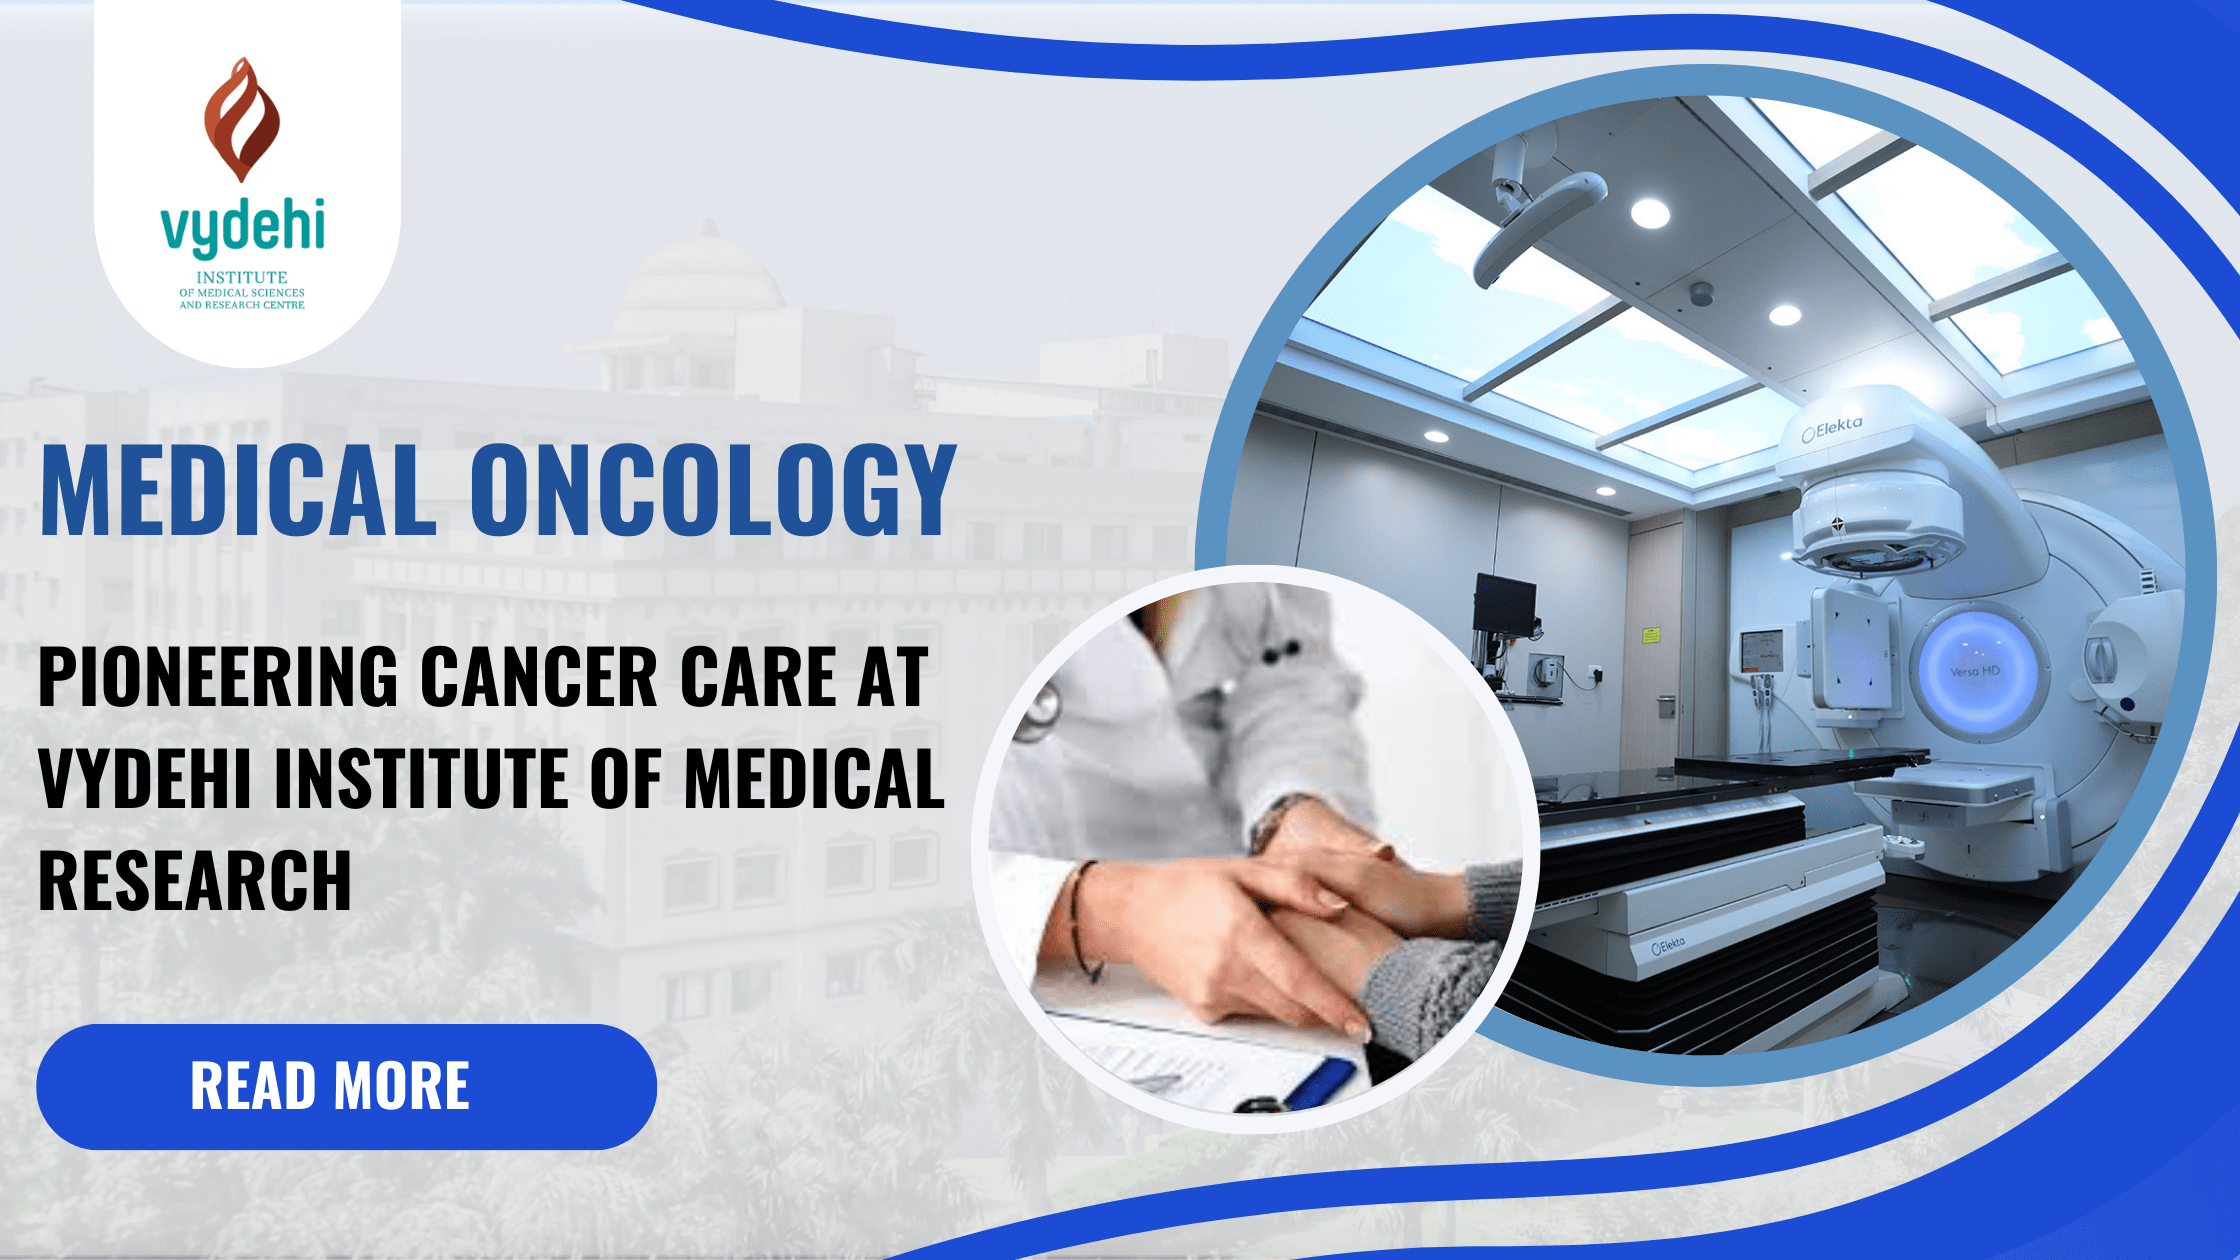 Medical Oncology